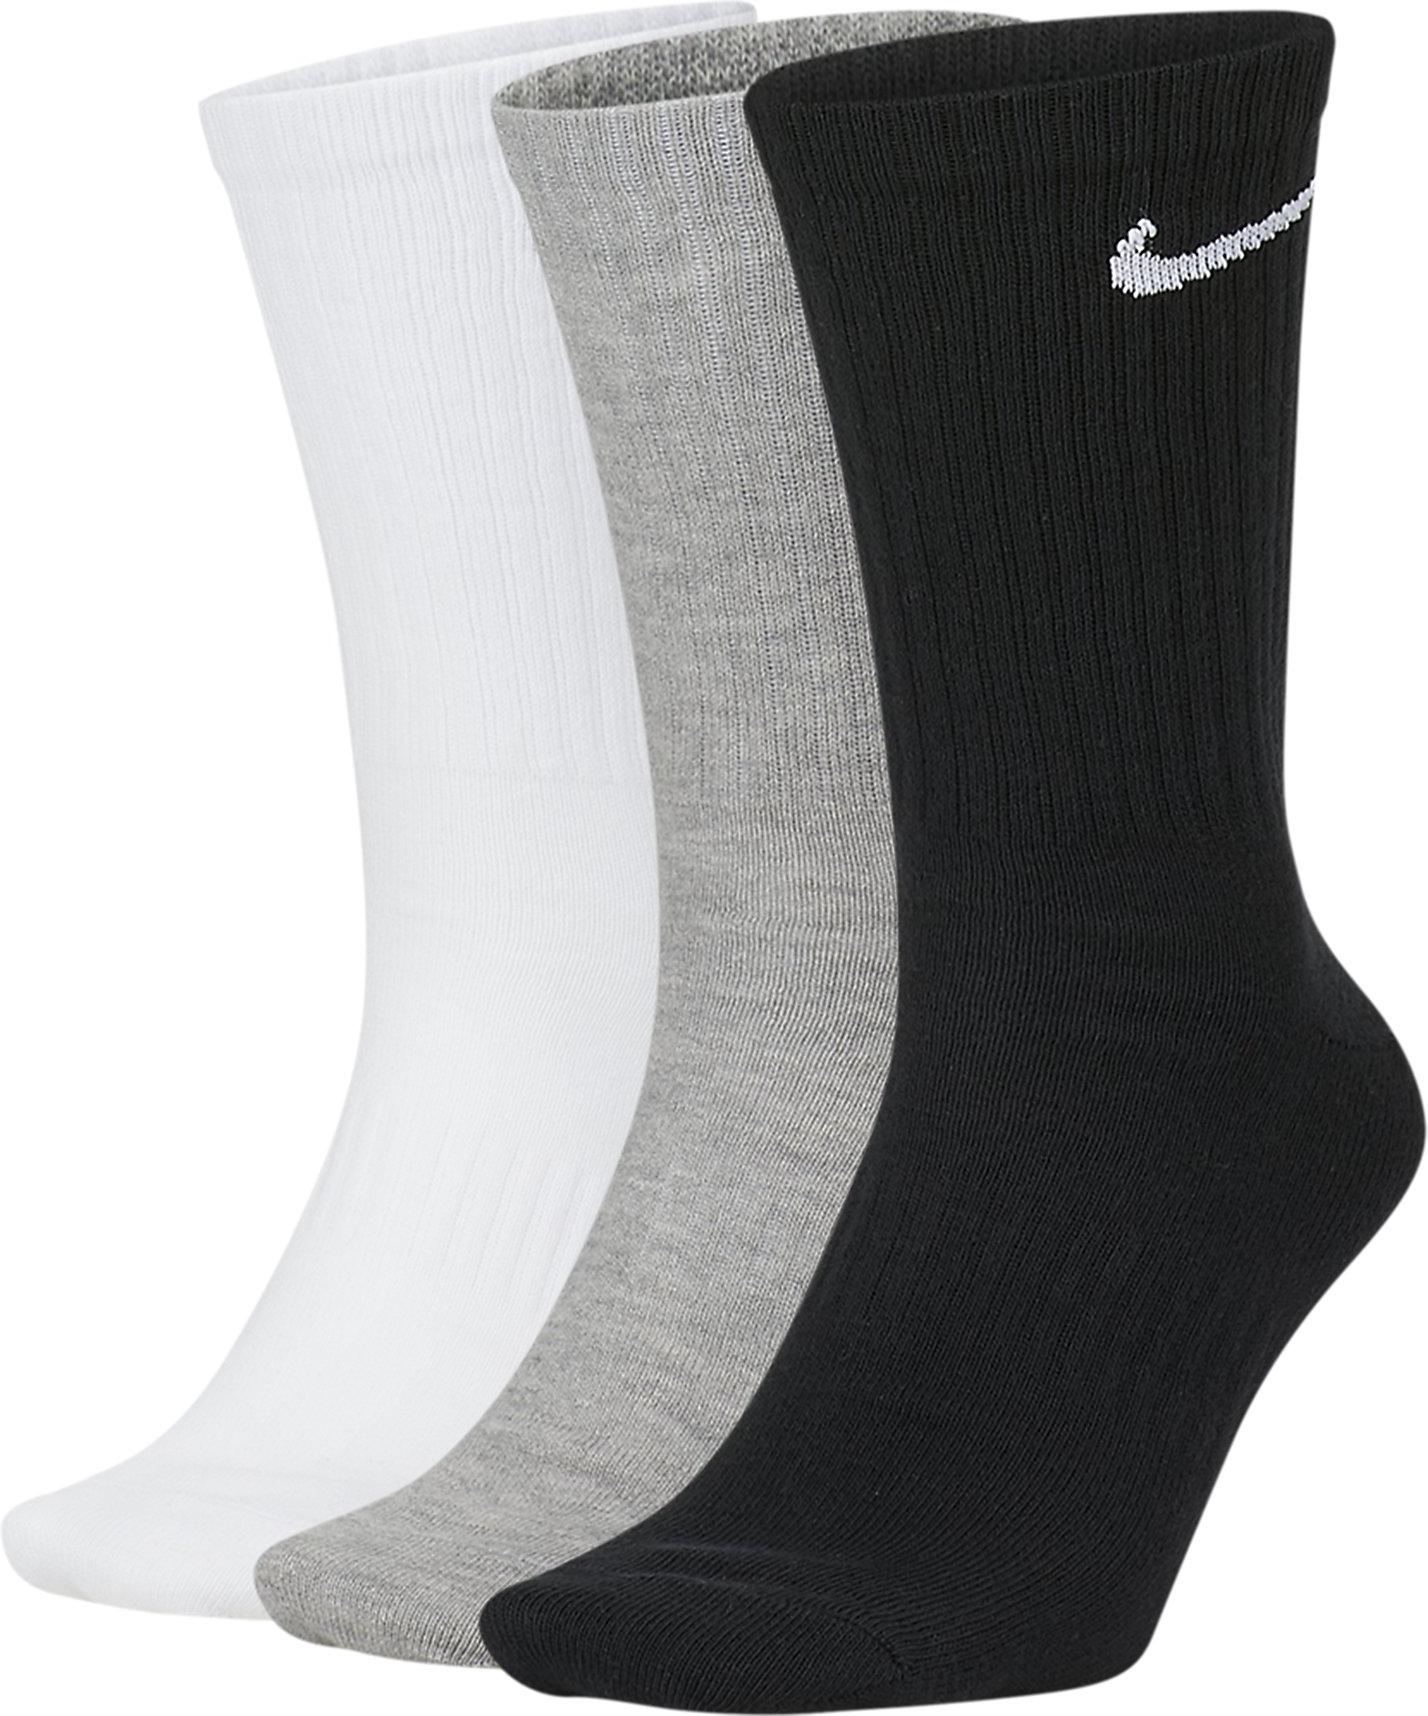 Socken Nike Everyday 3 pack